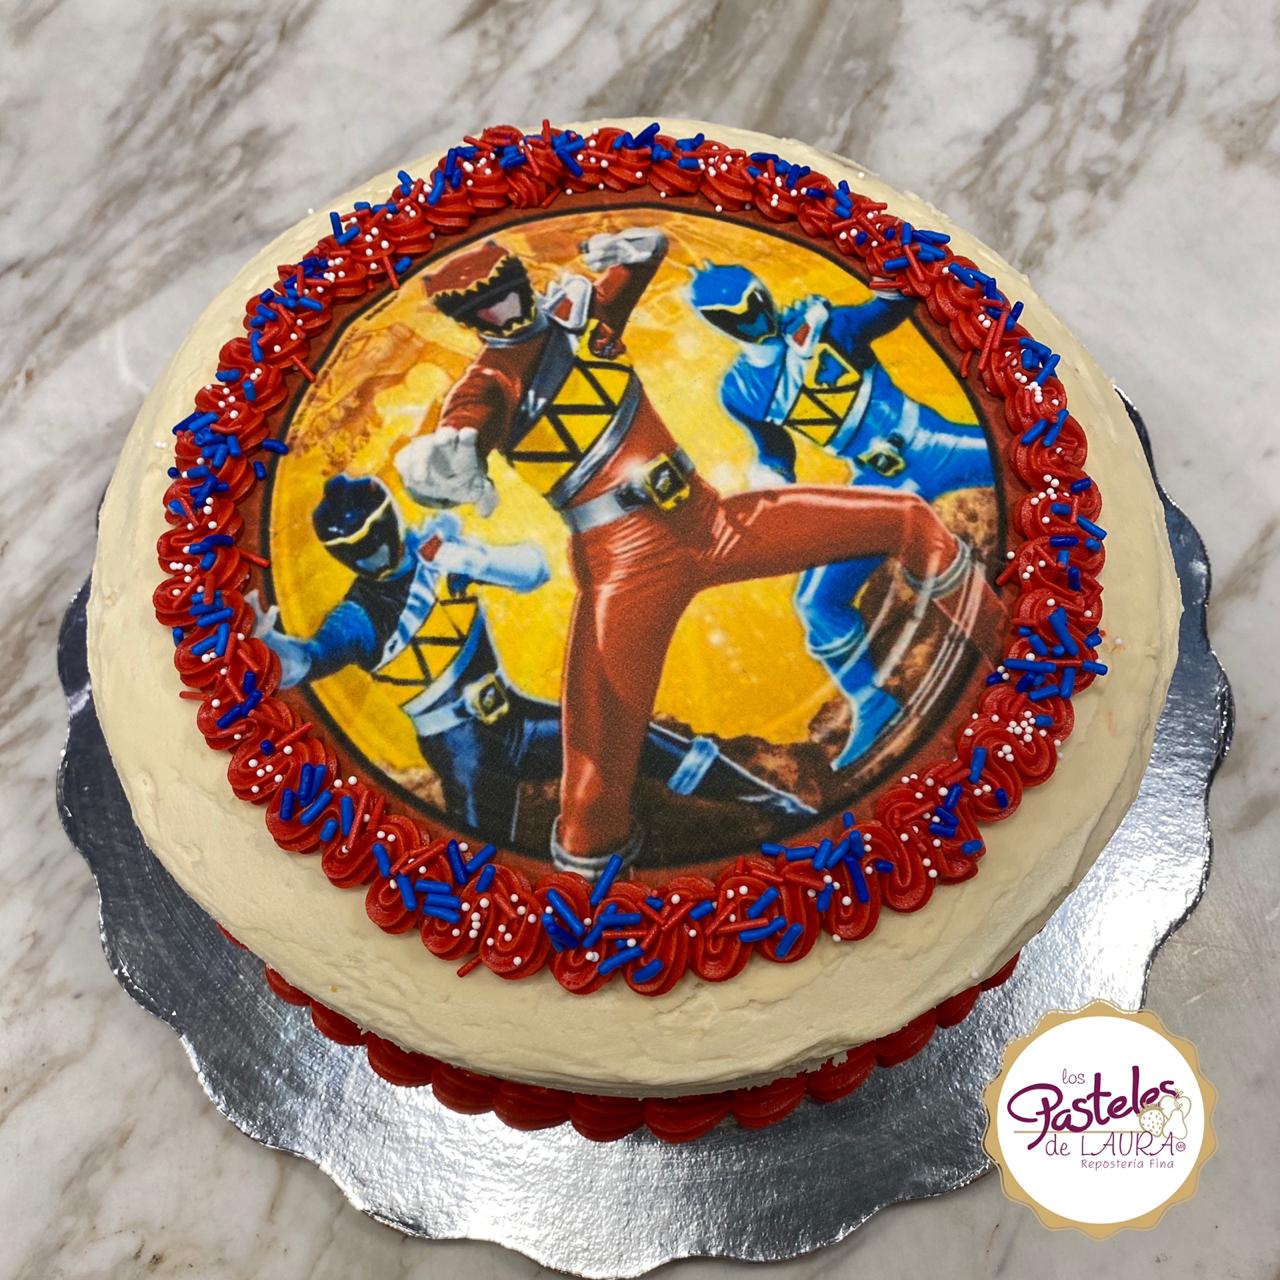 Power Rangers Cake - Pasteles de Laura